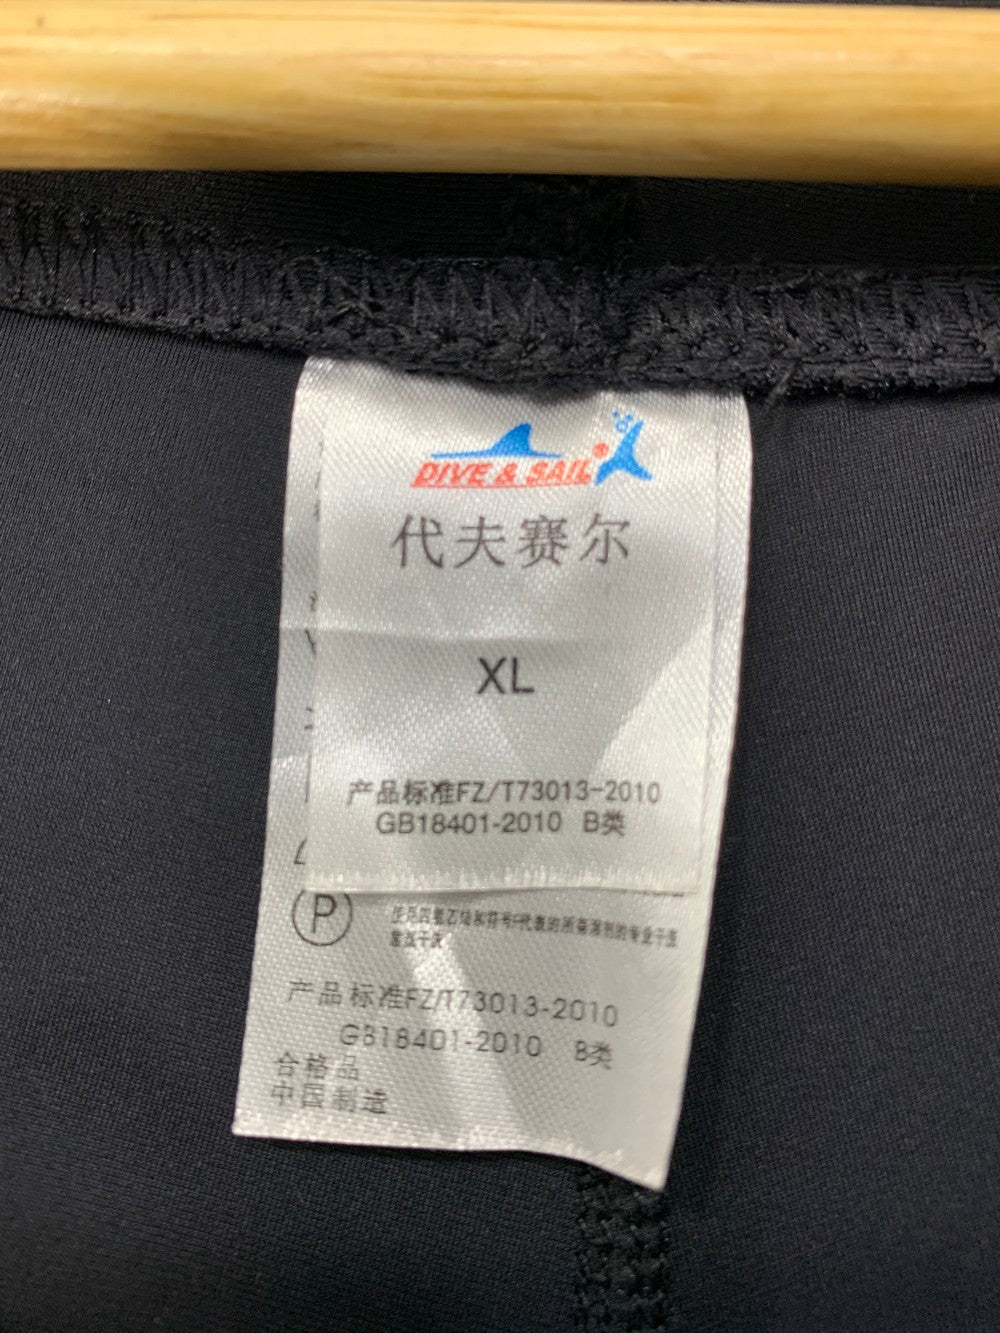 X-Manta Branded Original Sports Stretch Gym tights For Women